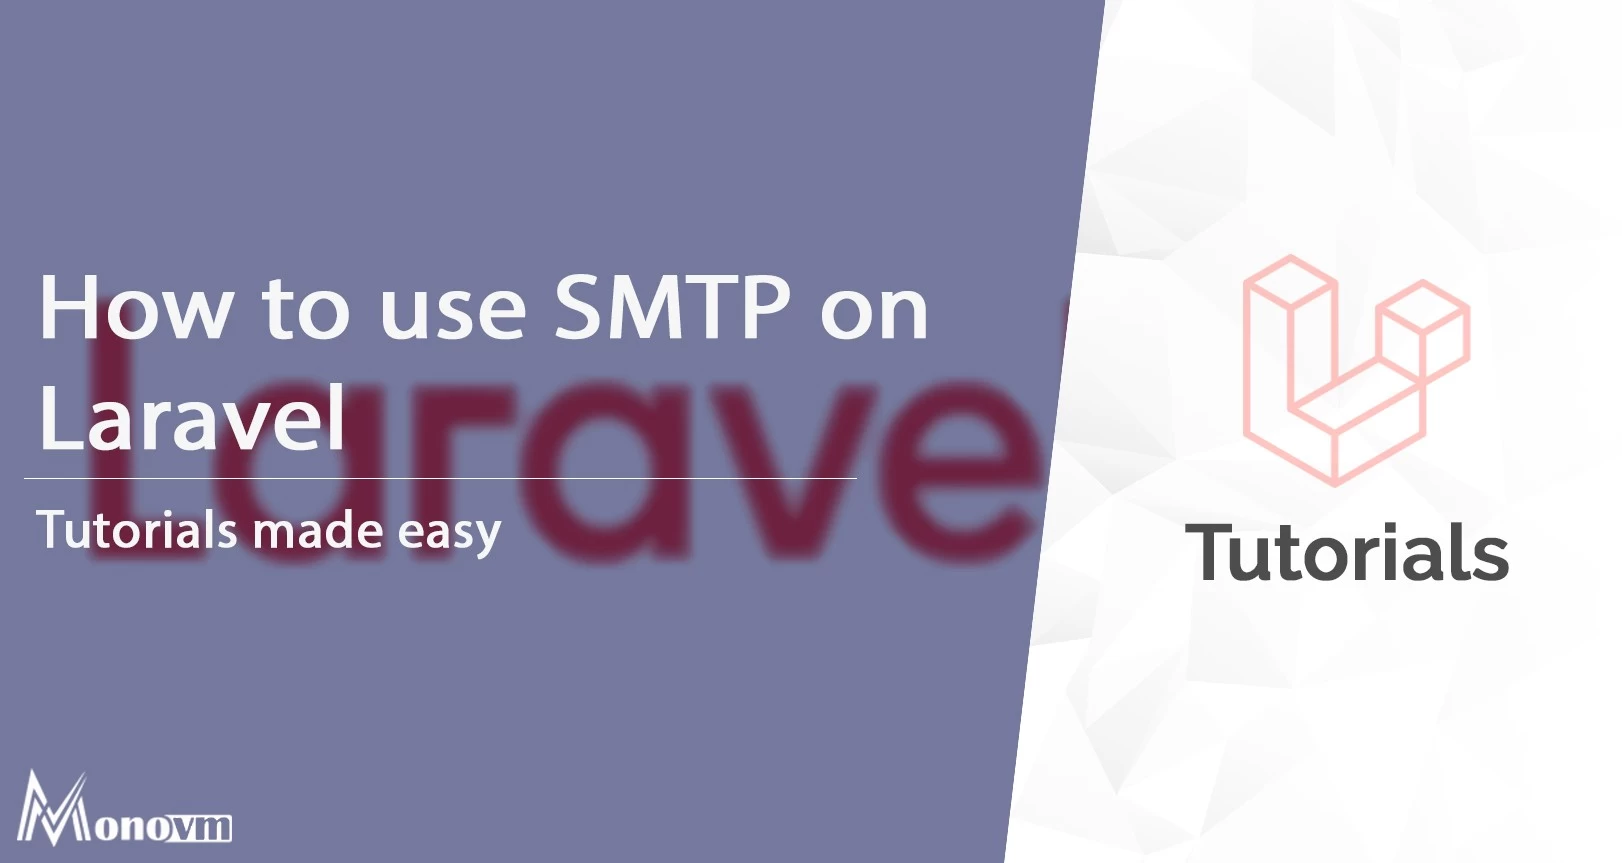 How to use SMTP on Laravel